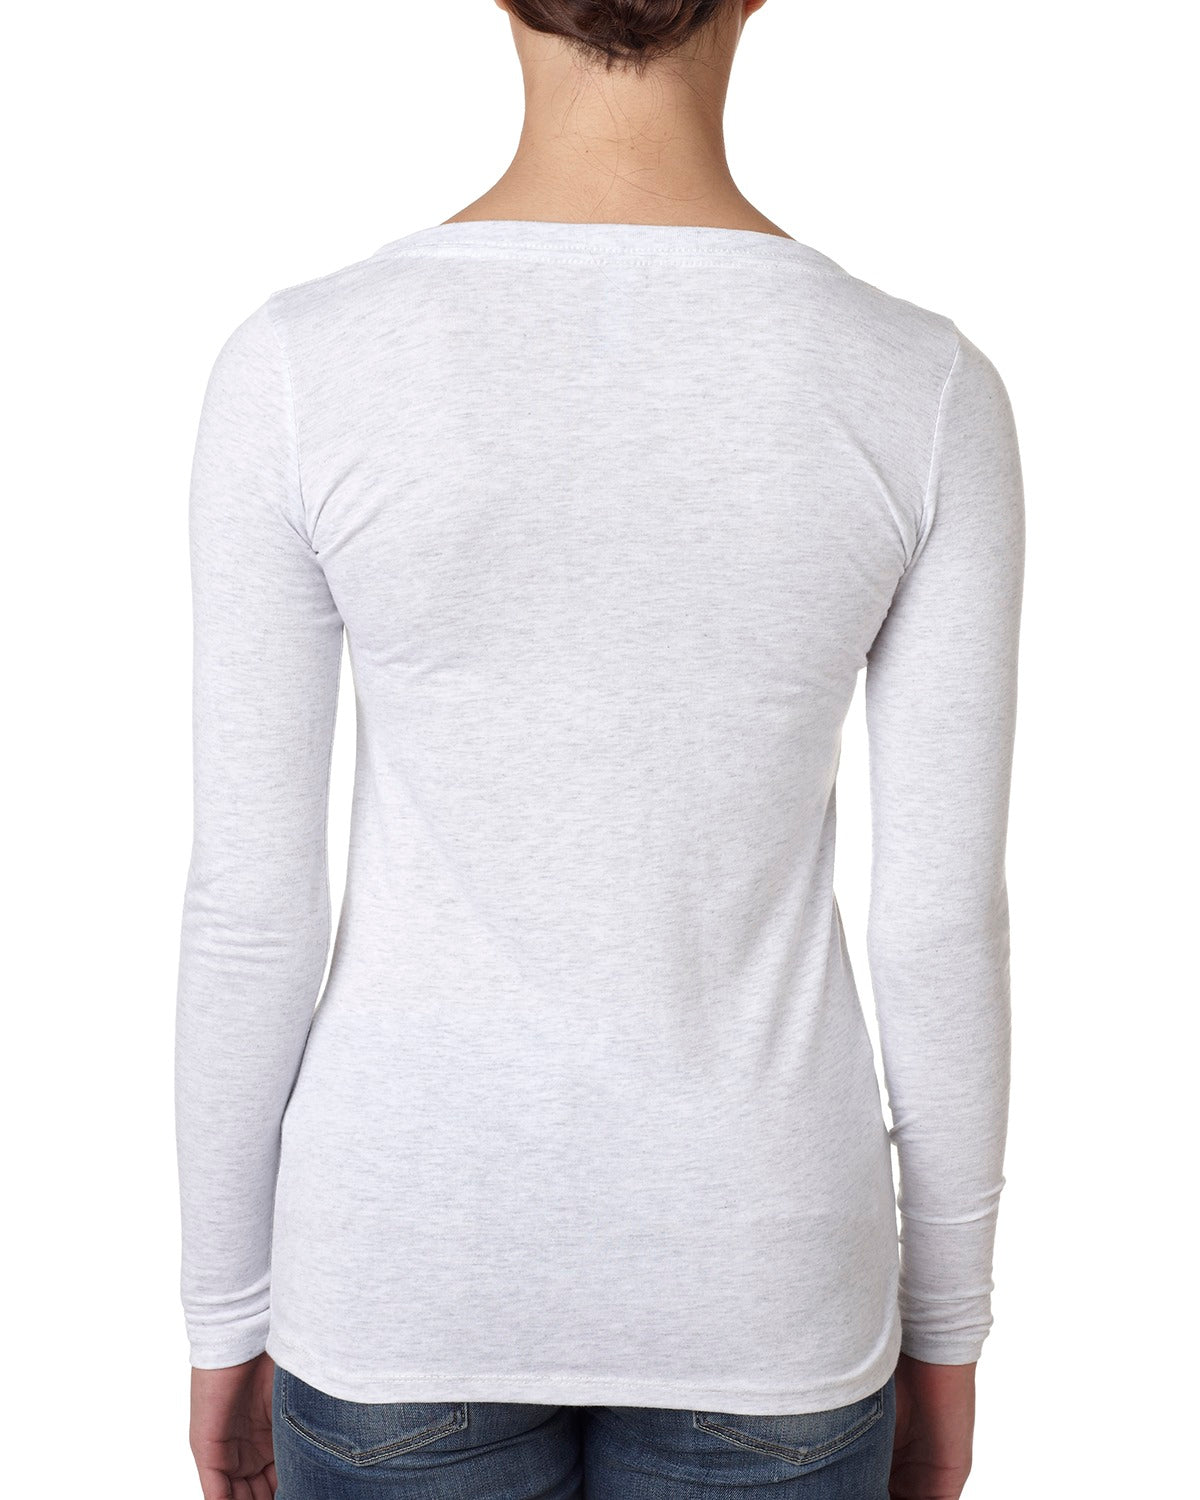 Elephant Spirit Shirt - Long-Sleeve Scoop Neck White